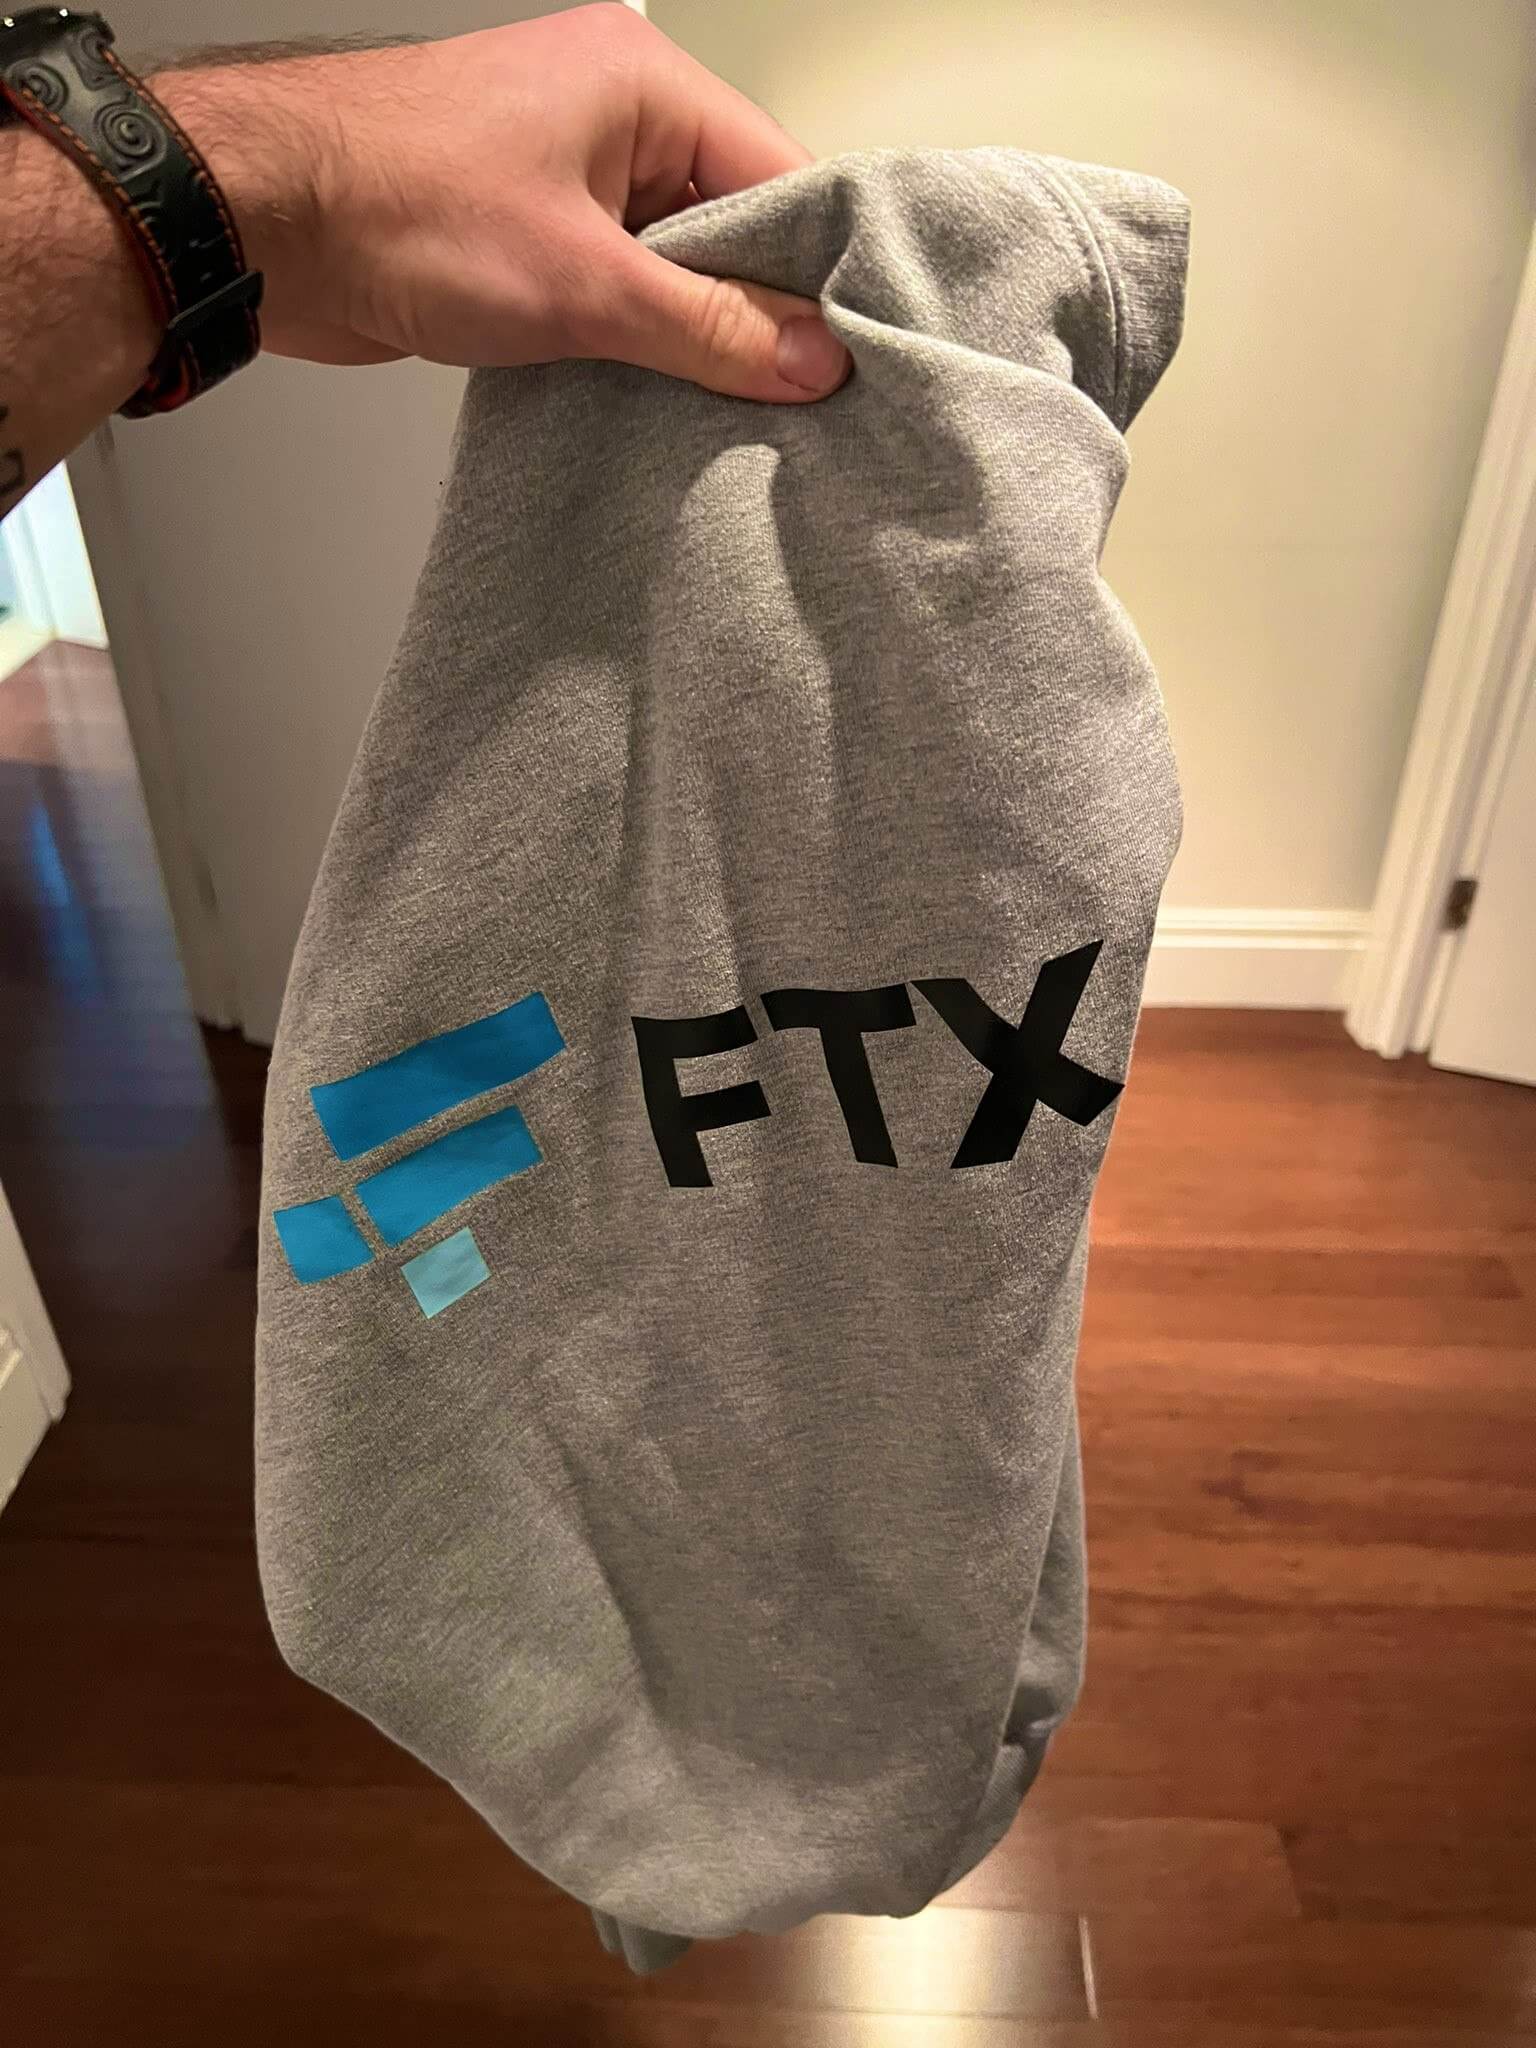 Как FTX инвестировала в спорт? Логотип FTX. Фото.